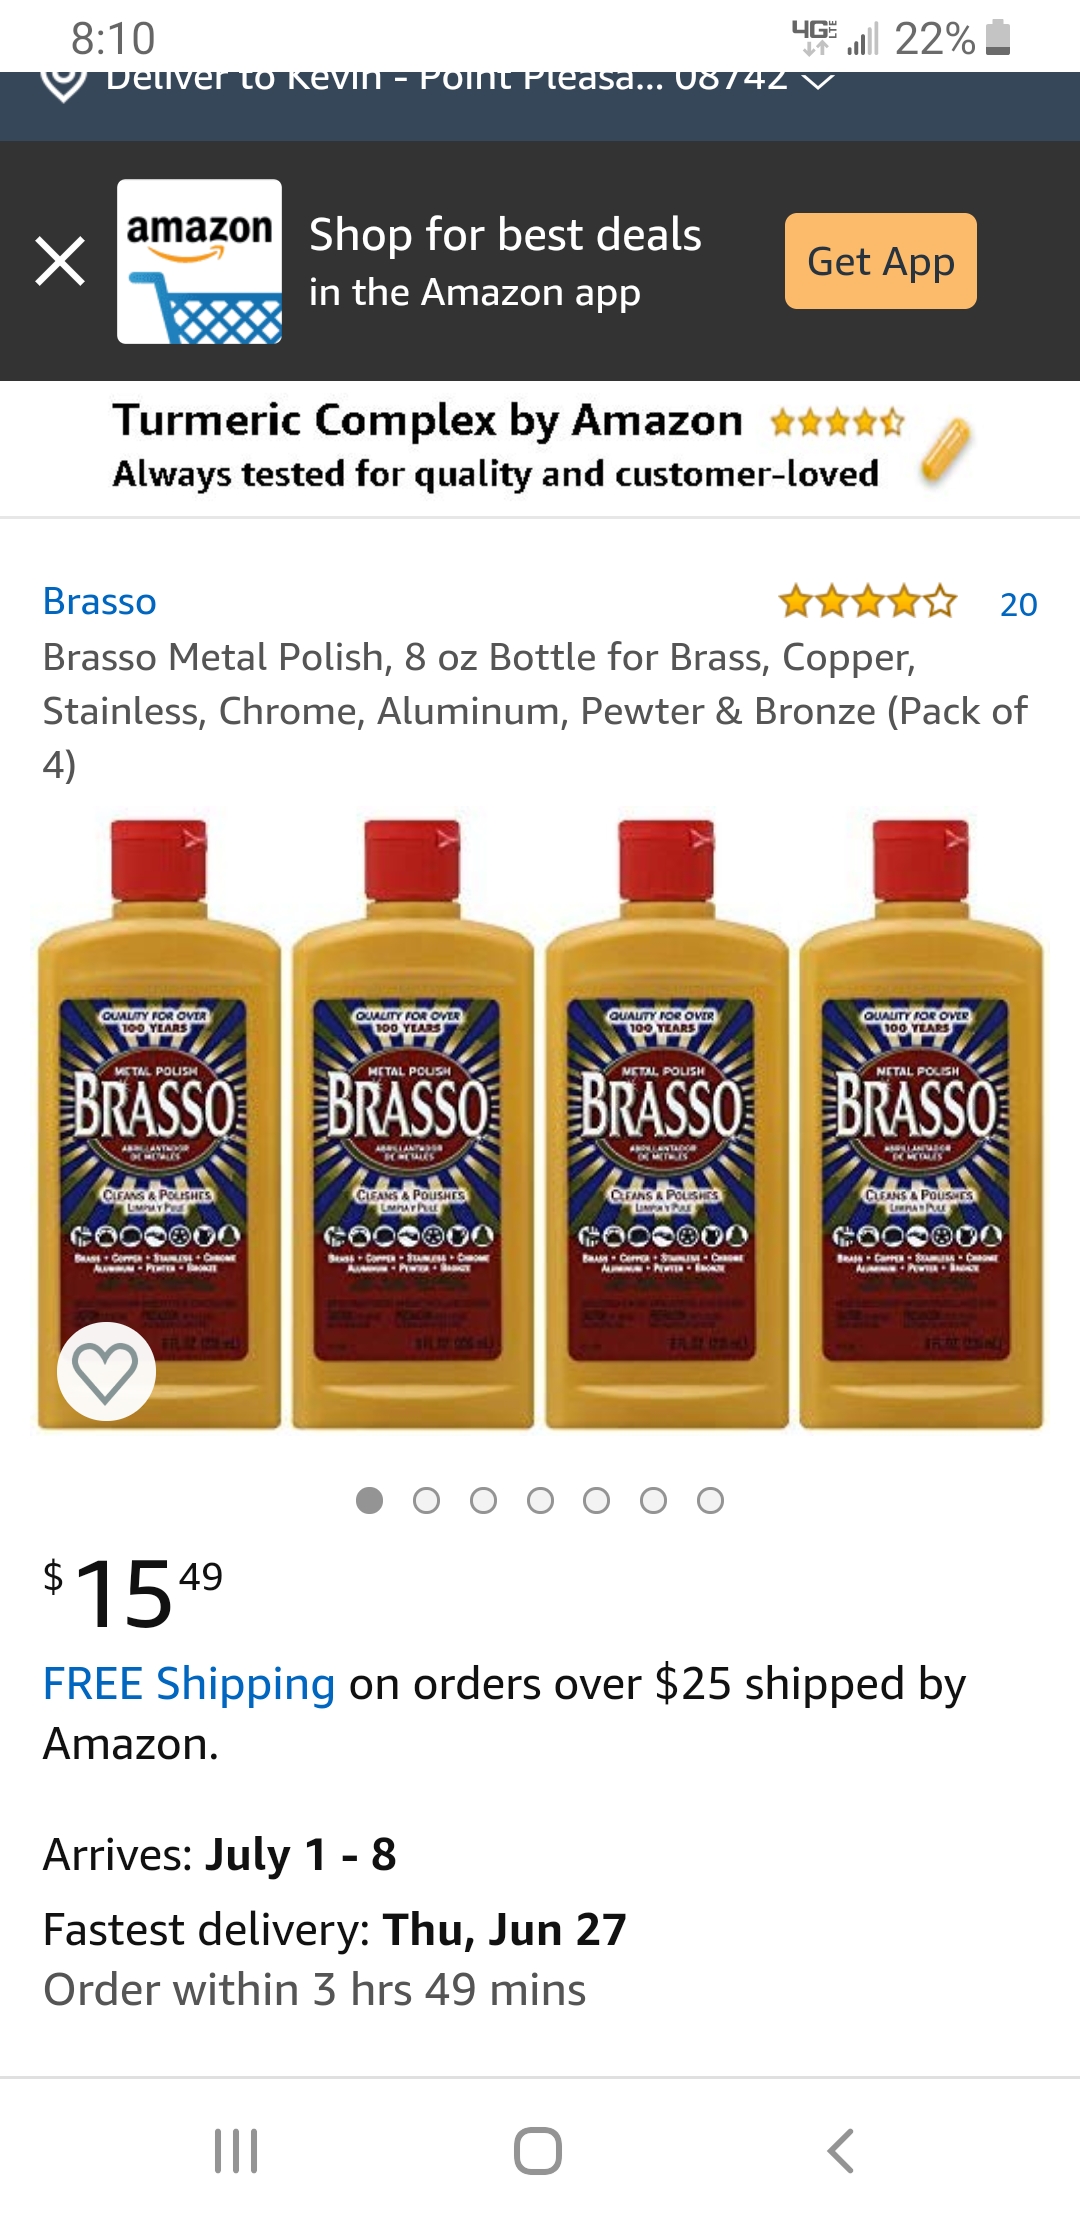 Brasso Metal Polish 8 oz Bottle for Brass Copper Stainless Chrome Aluminum Pewter & Bronze (Pack of 4)